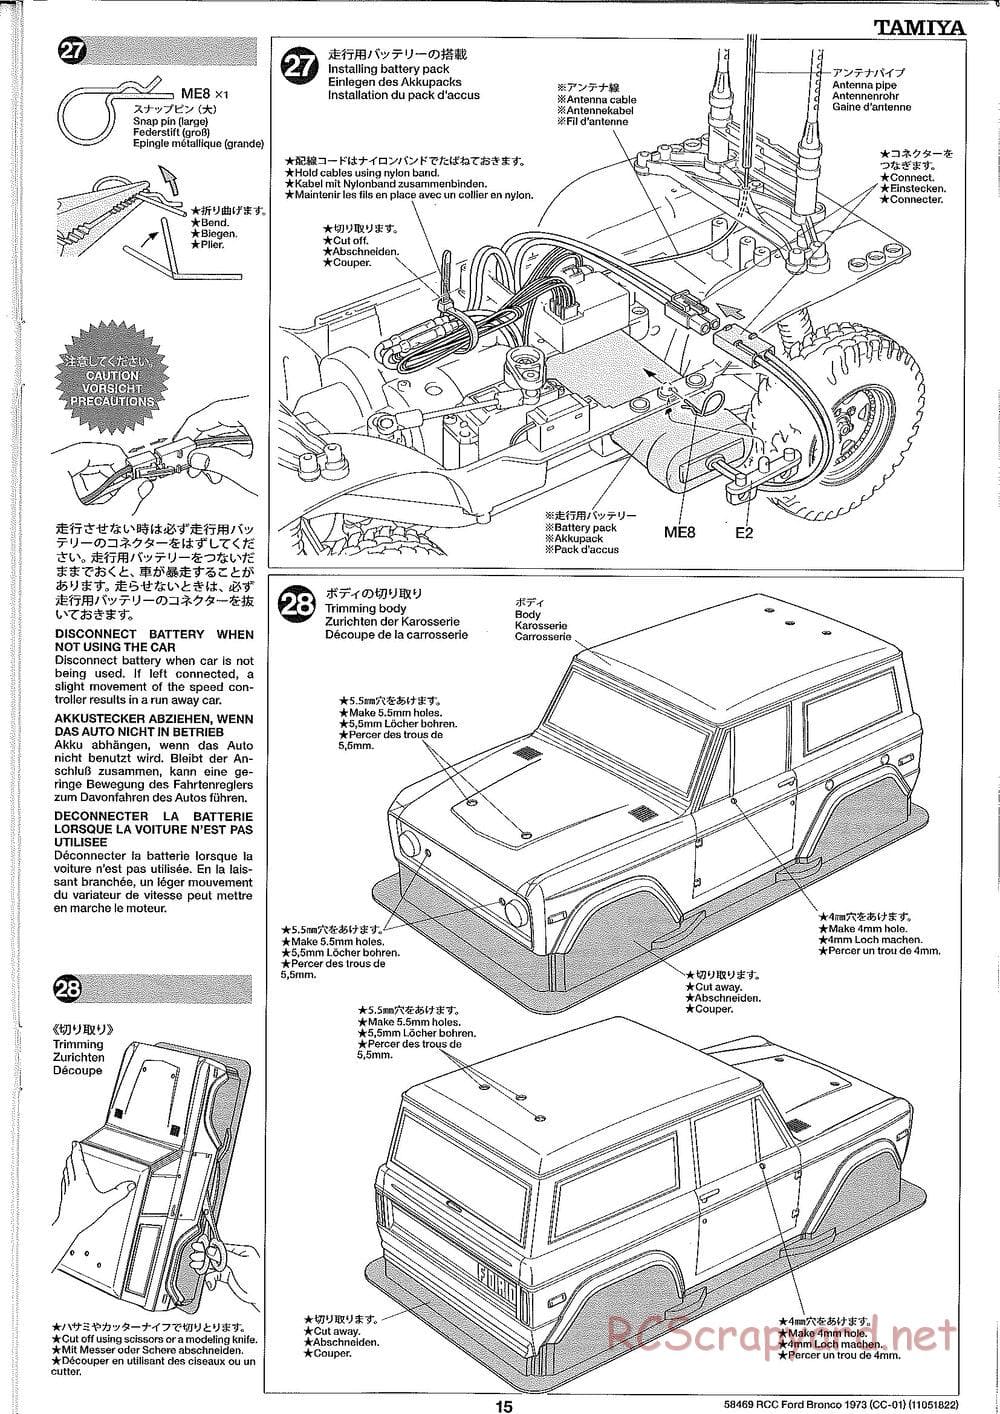 Tamiya - Ford Bronco 1973 - CC-01 Chassis - Manual - Page 15